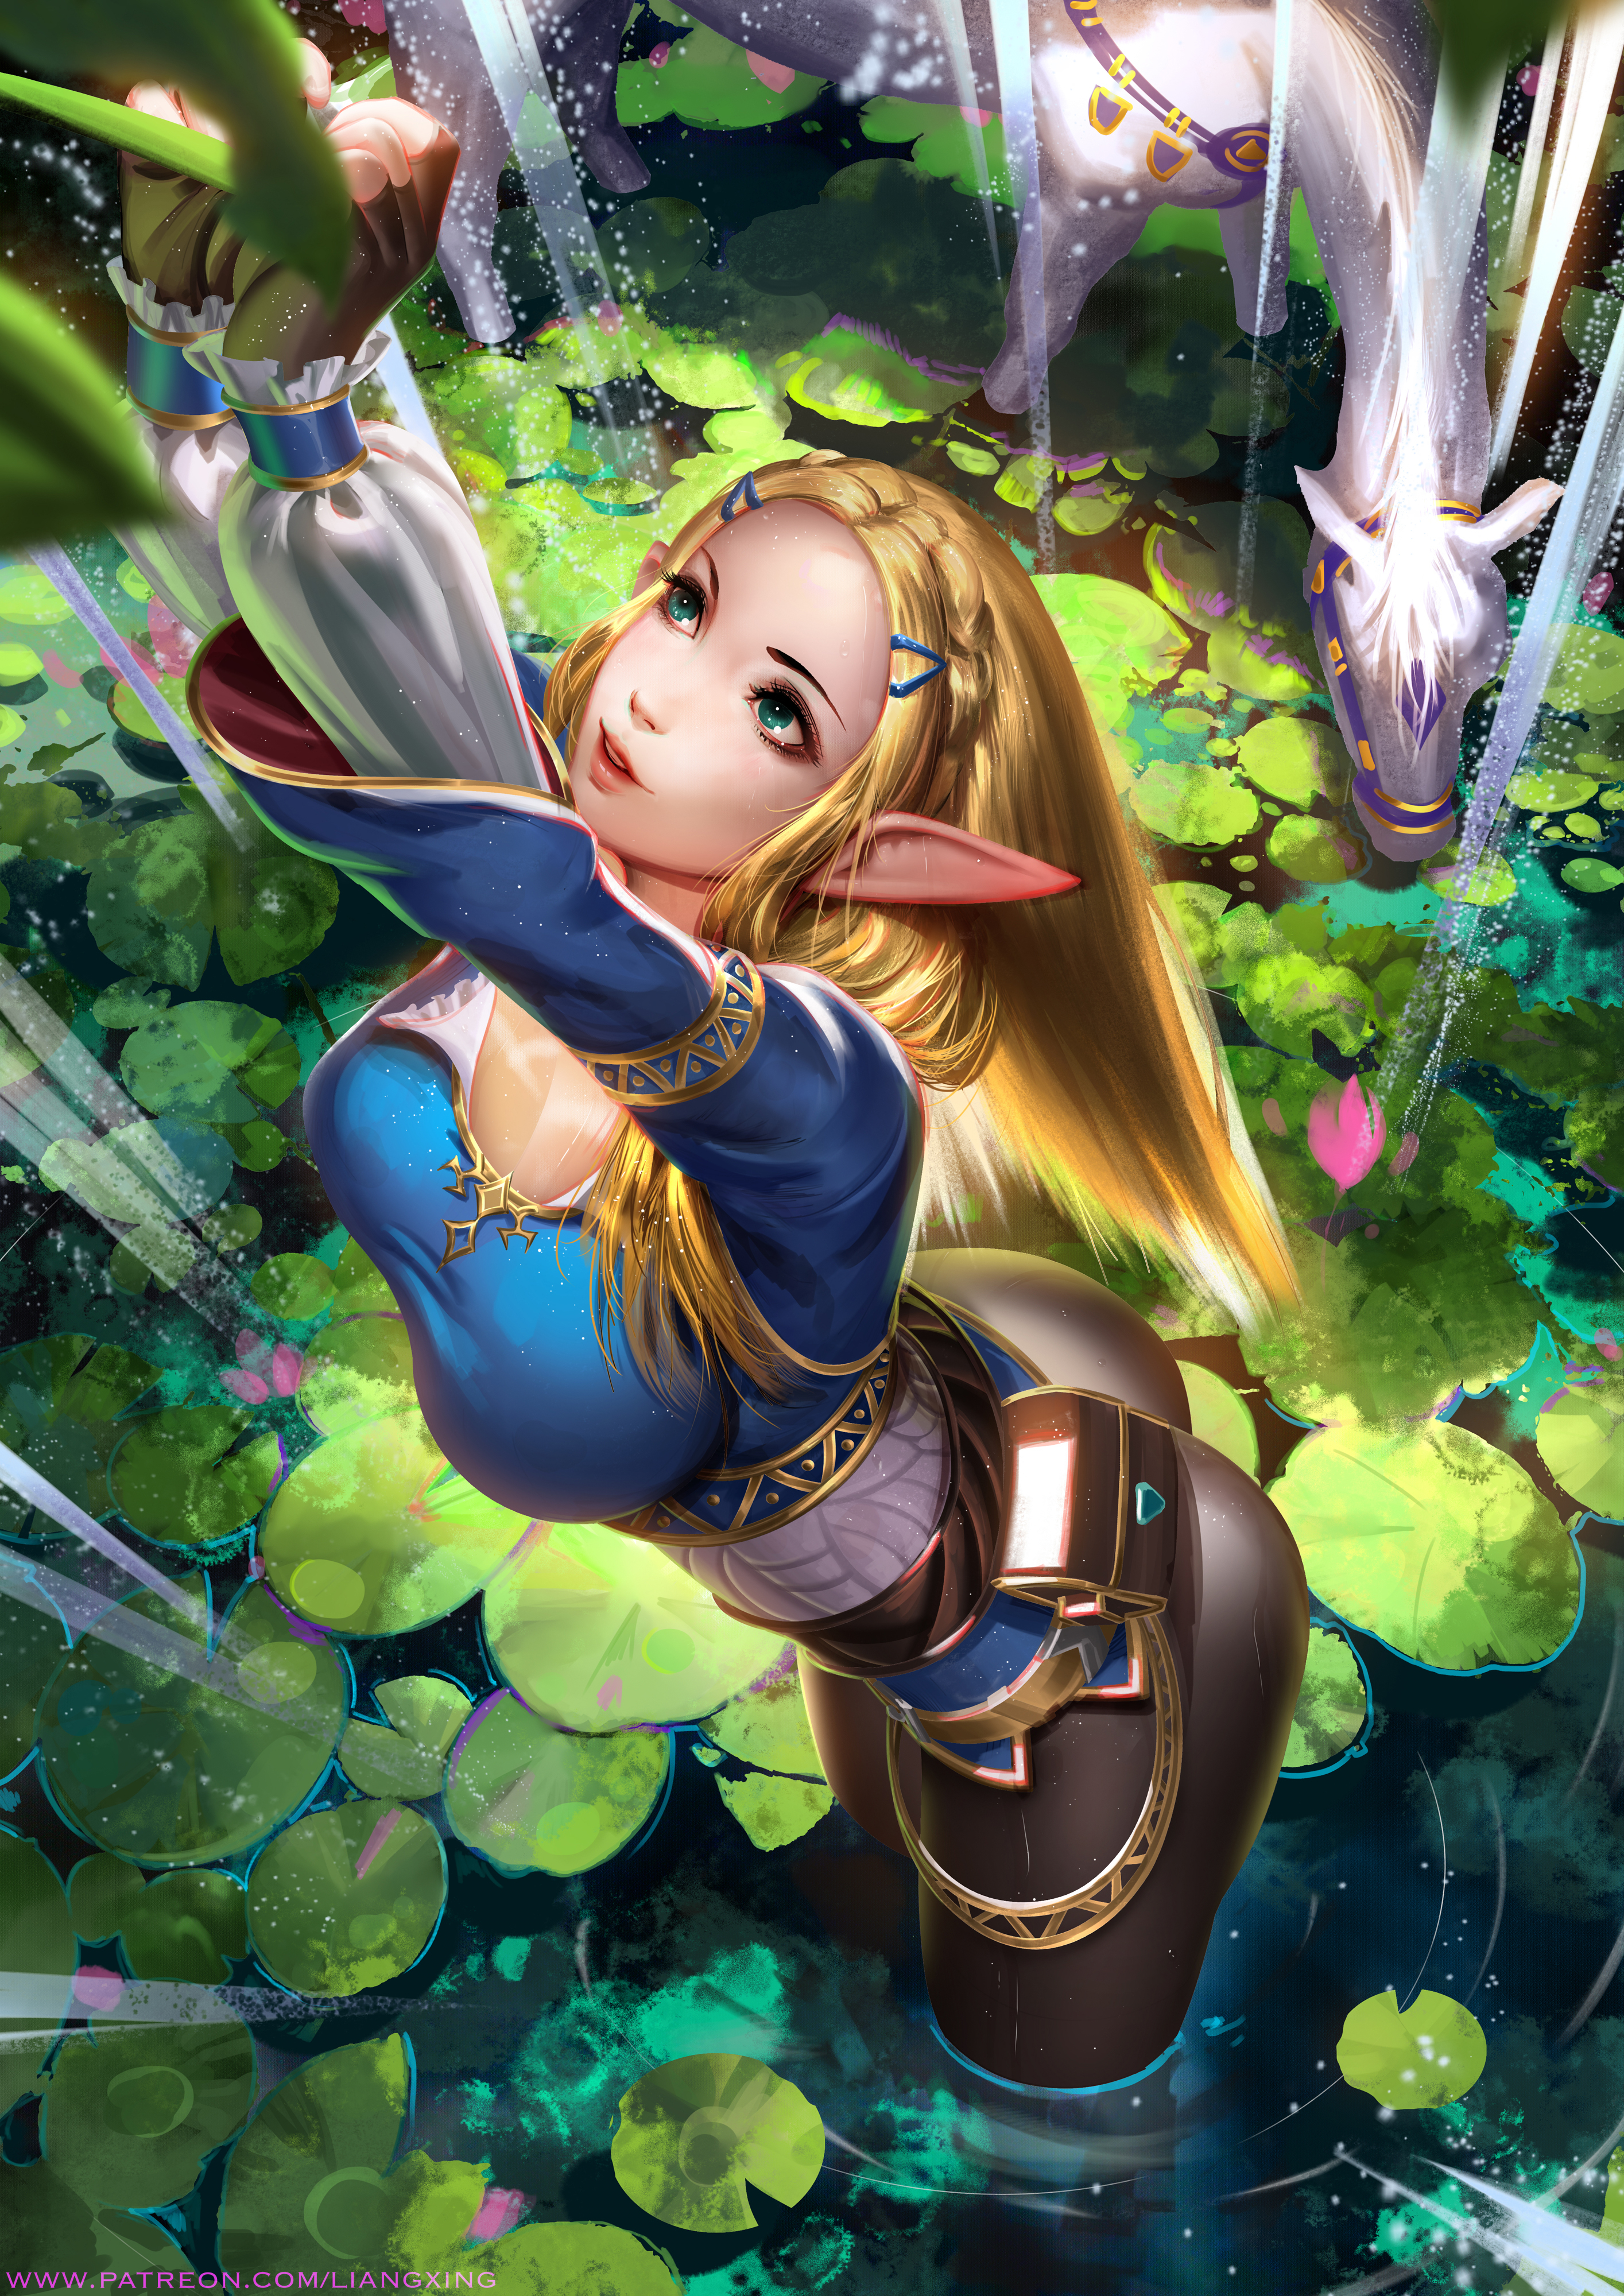 Zelda The Legend Of Zelda Video Games Nintendo Video Game Girls Elves Pointy Ears Blonde Water Lily  2829x4000